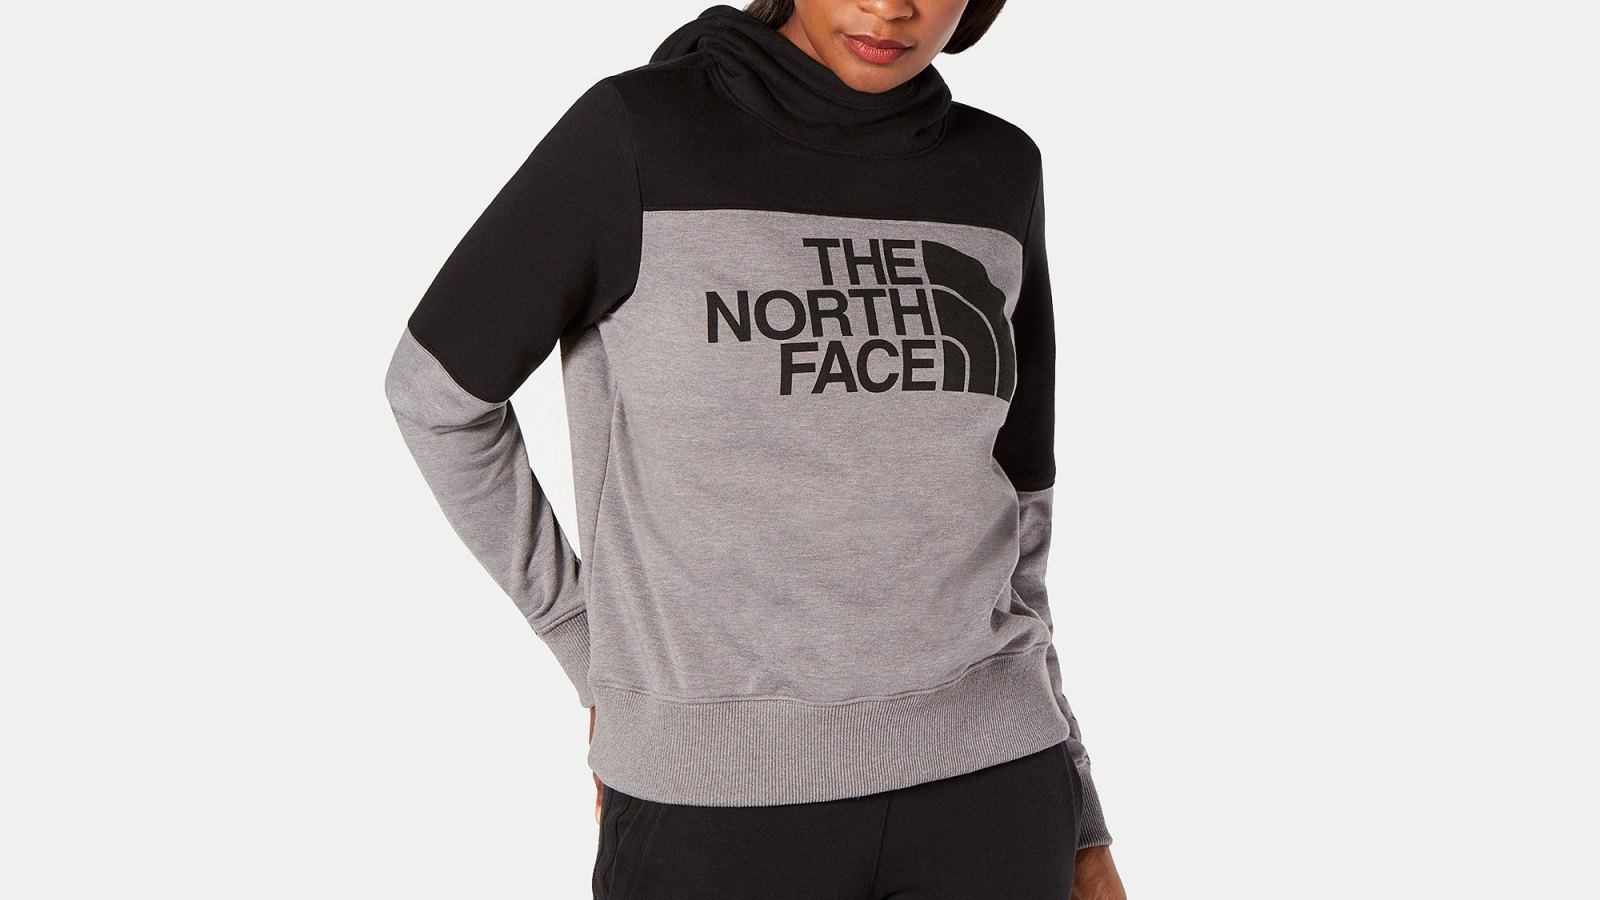 The North Face Drew Peak Pullover Hoodie